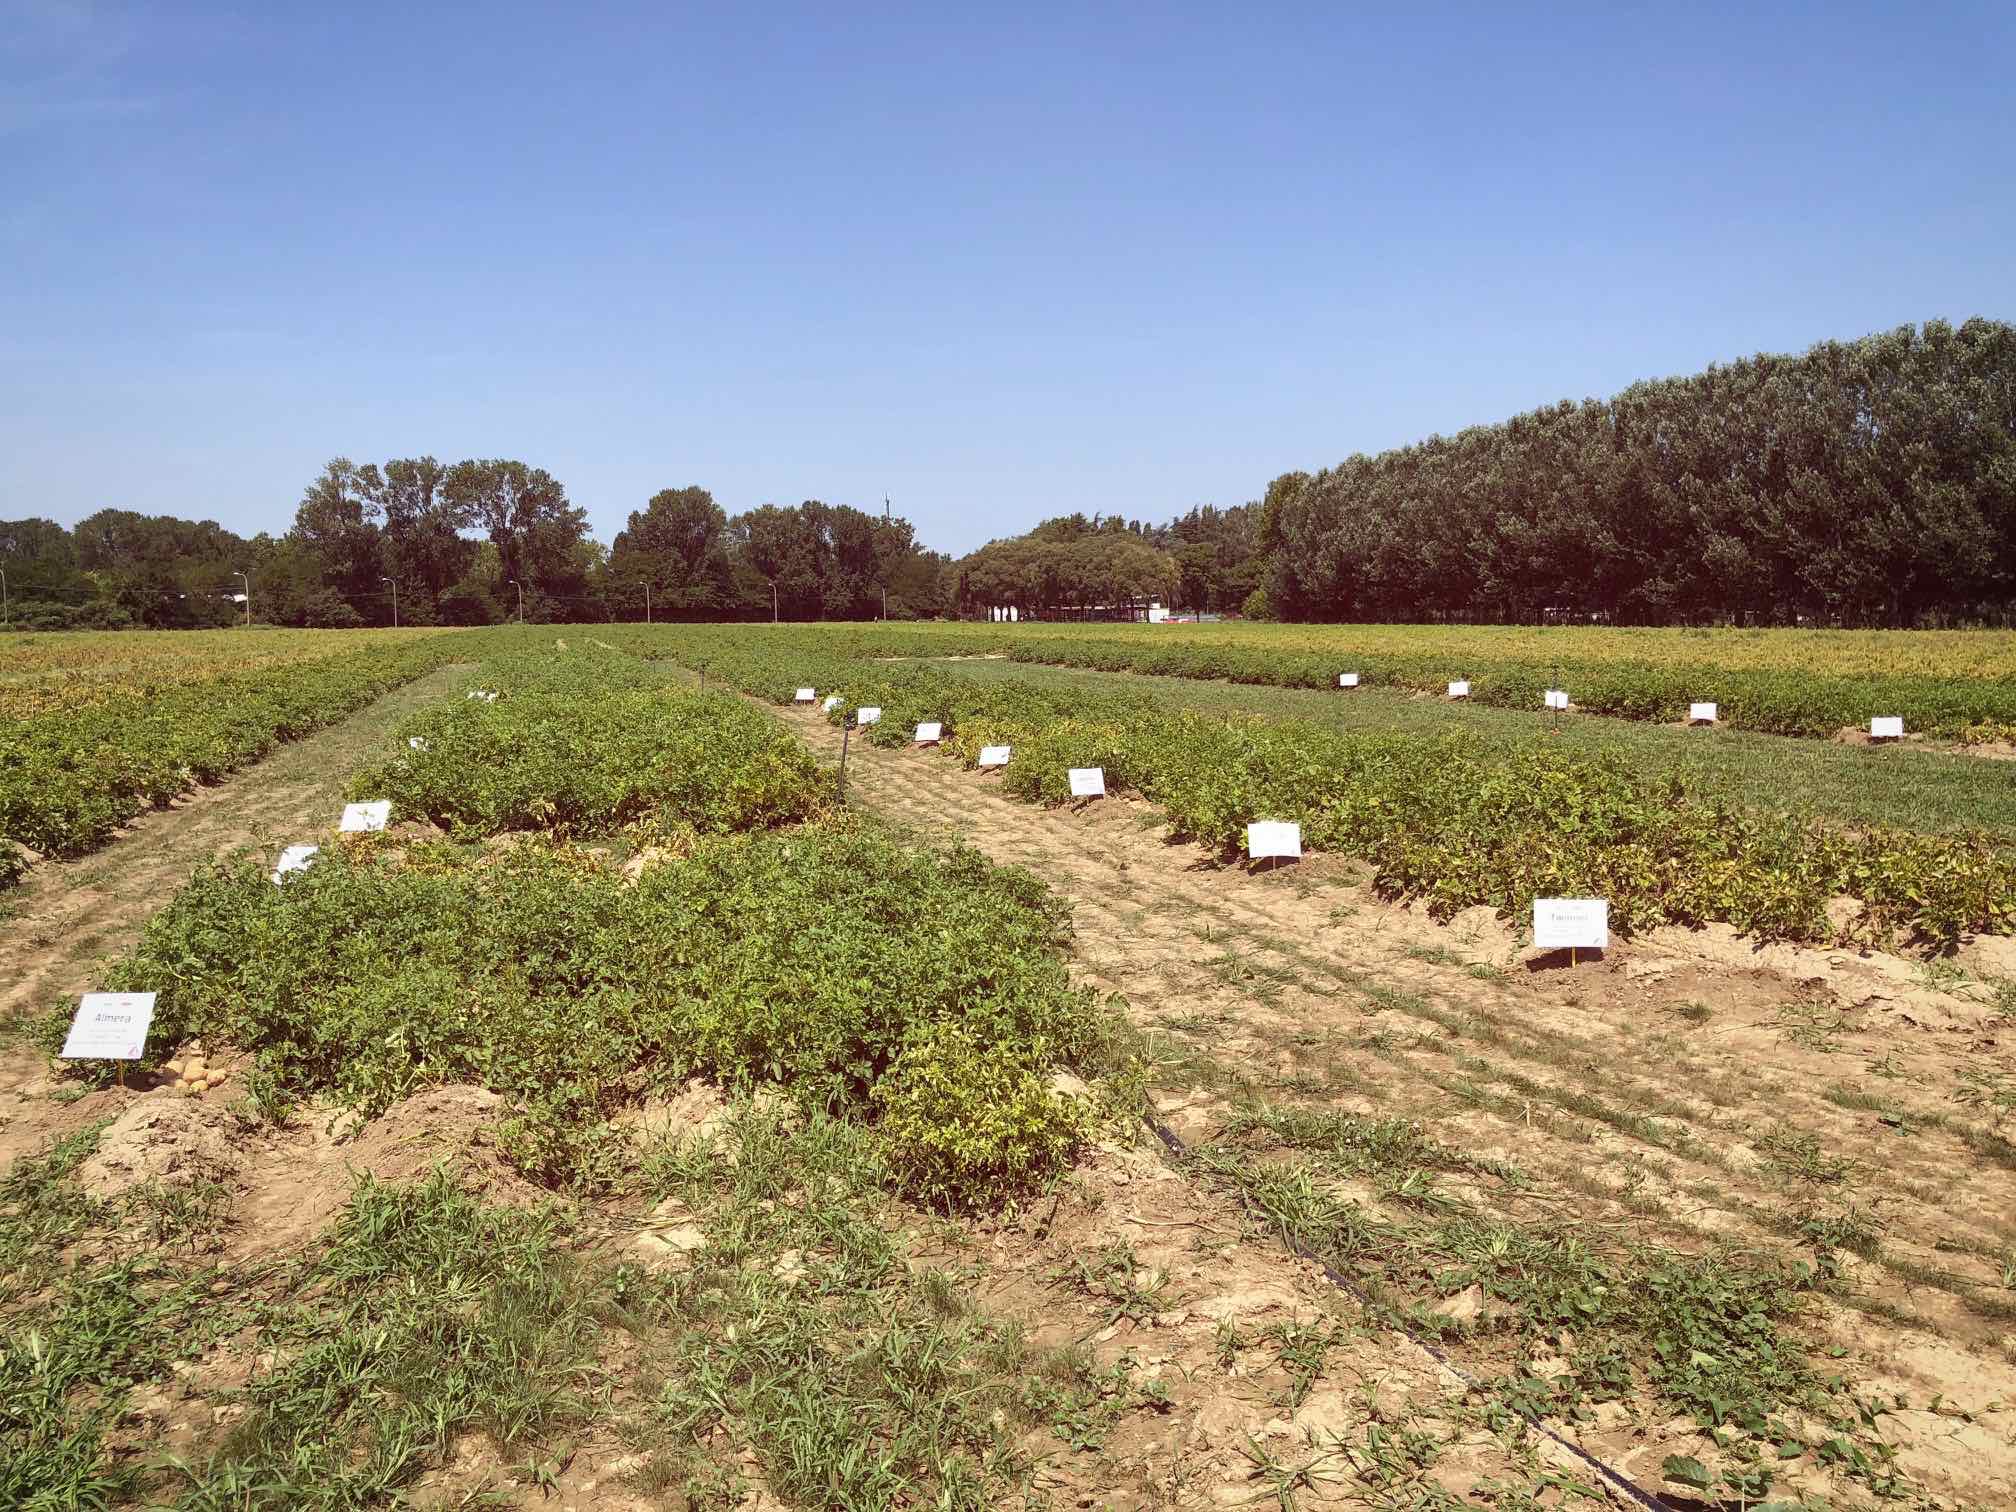 Romagnoli F.lli Spa is setting its sights on sustainable potato farming